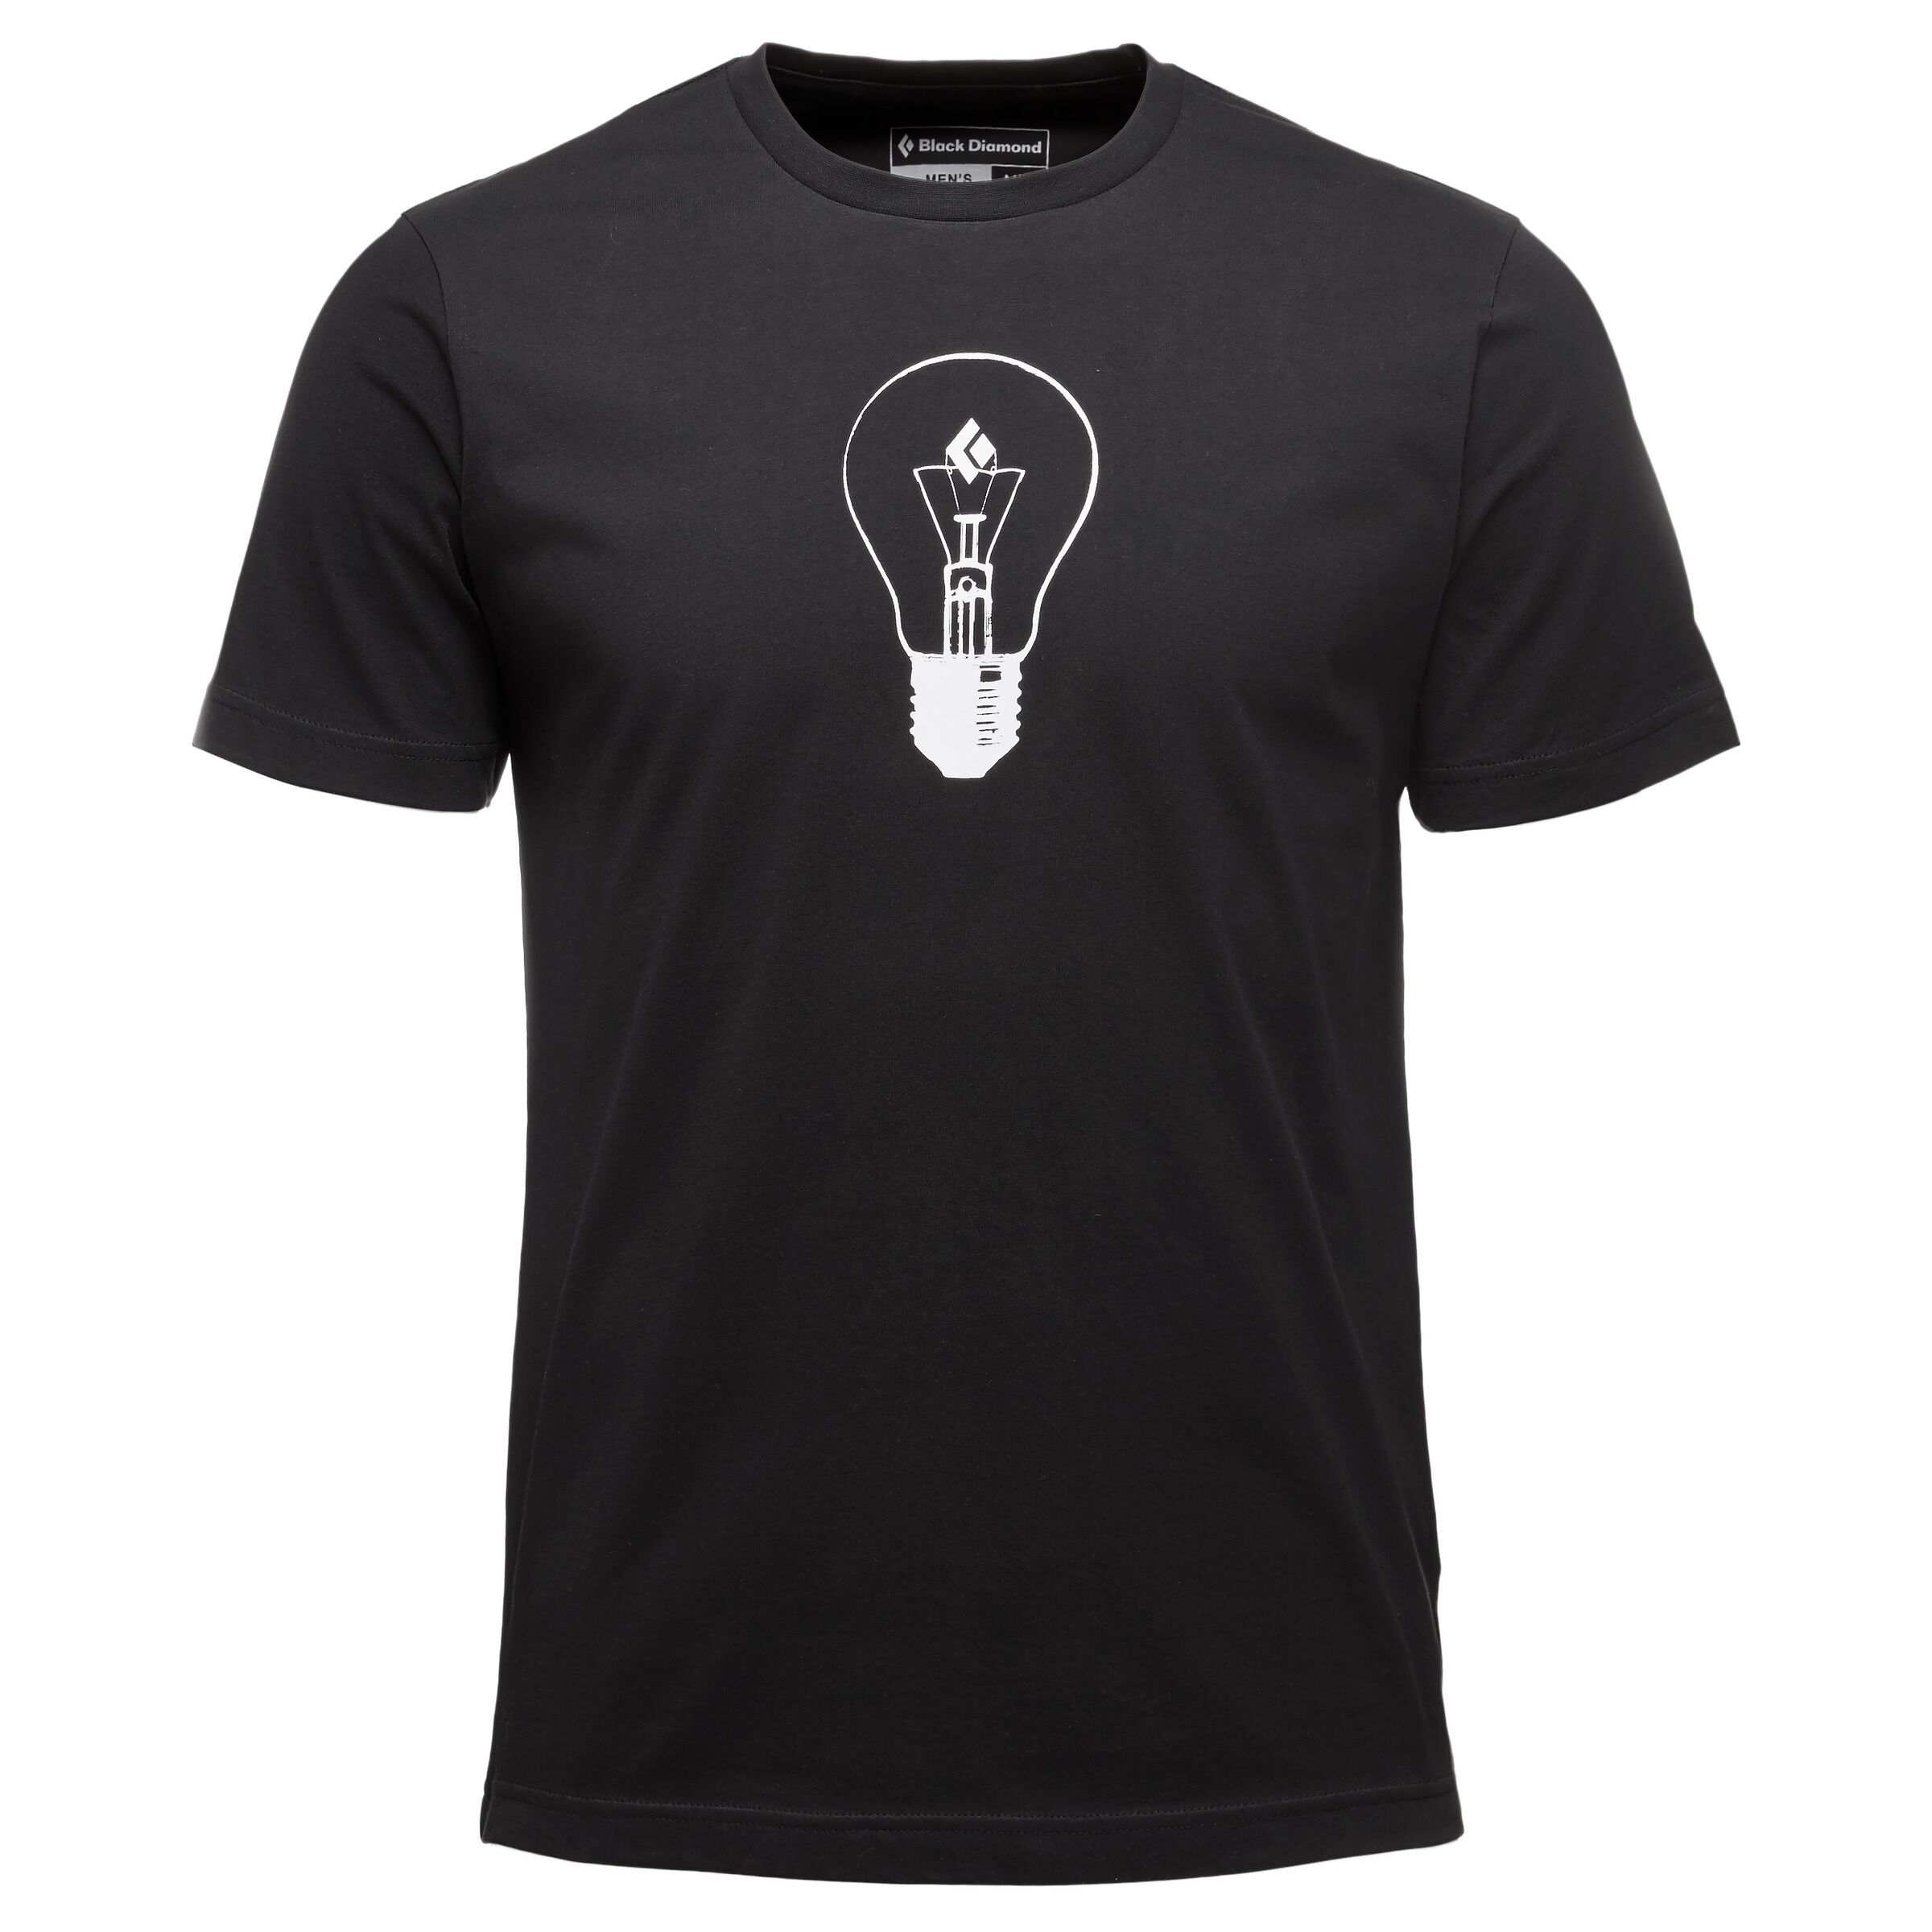 Black Diamond - Bd Idea Tee - T-Shirt - Men's